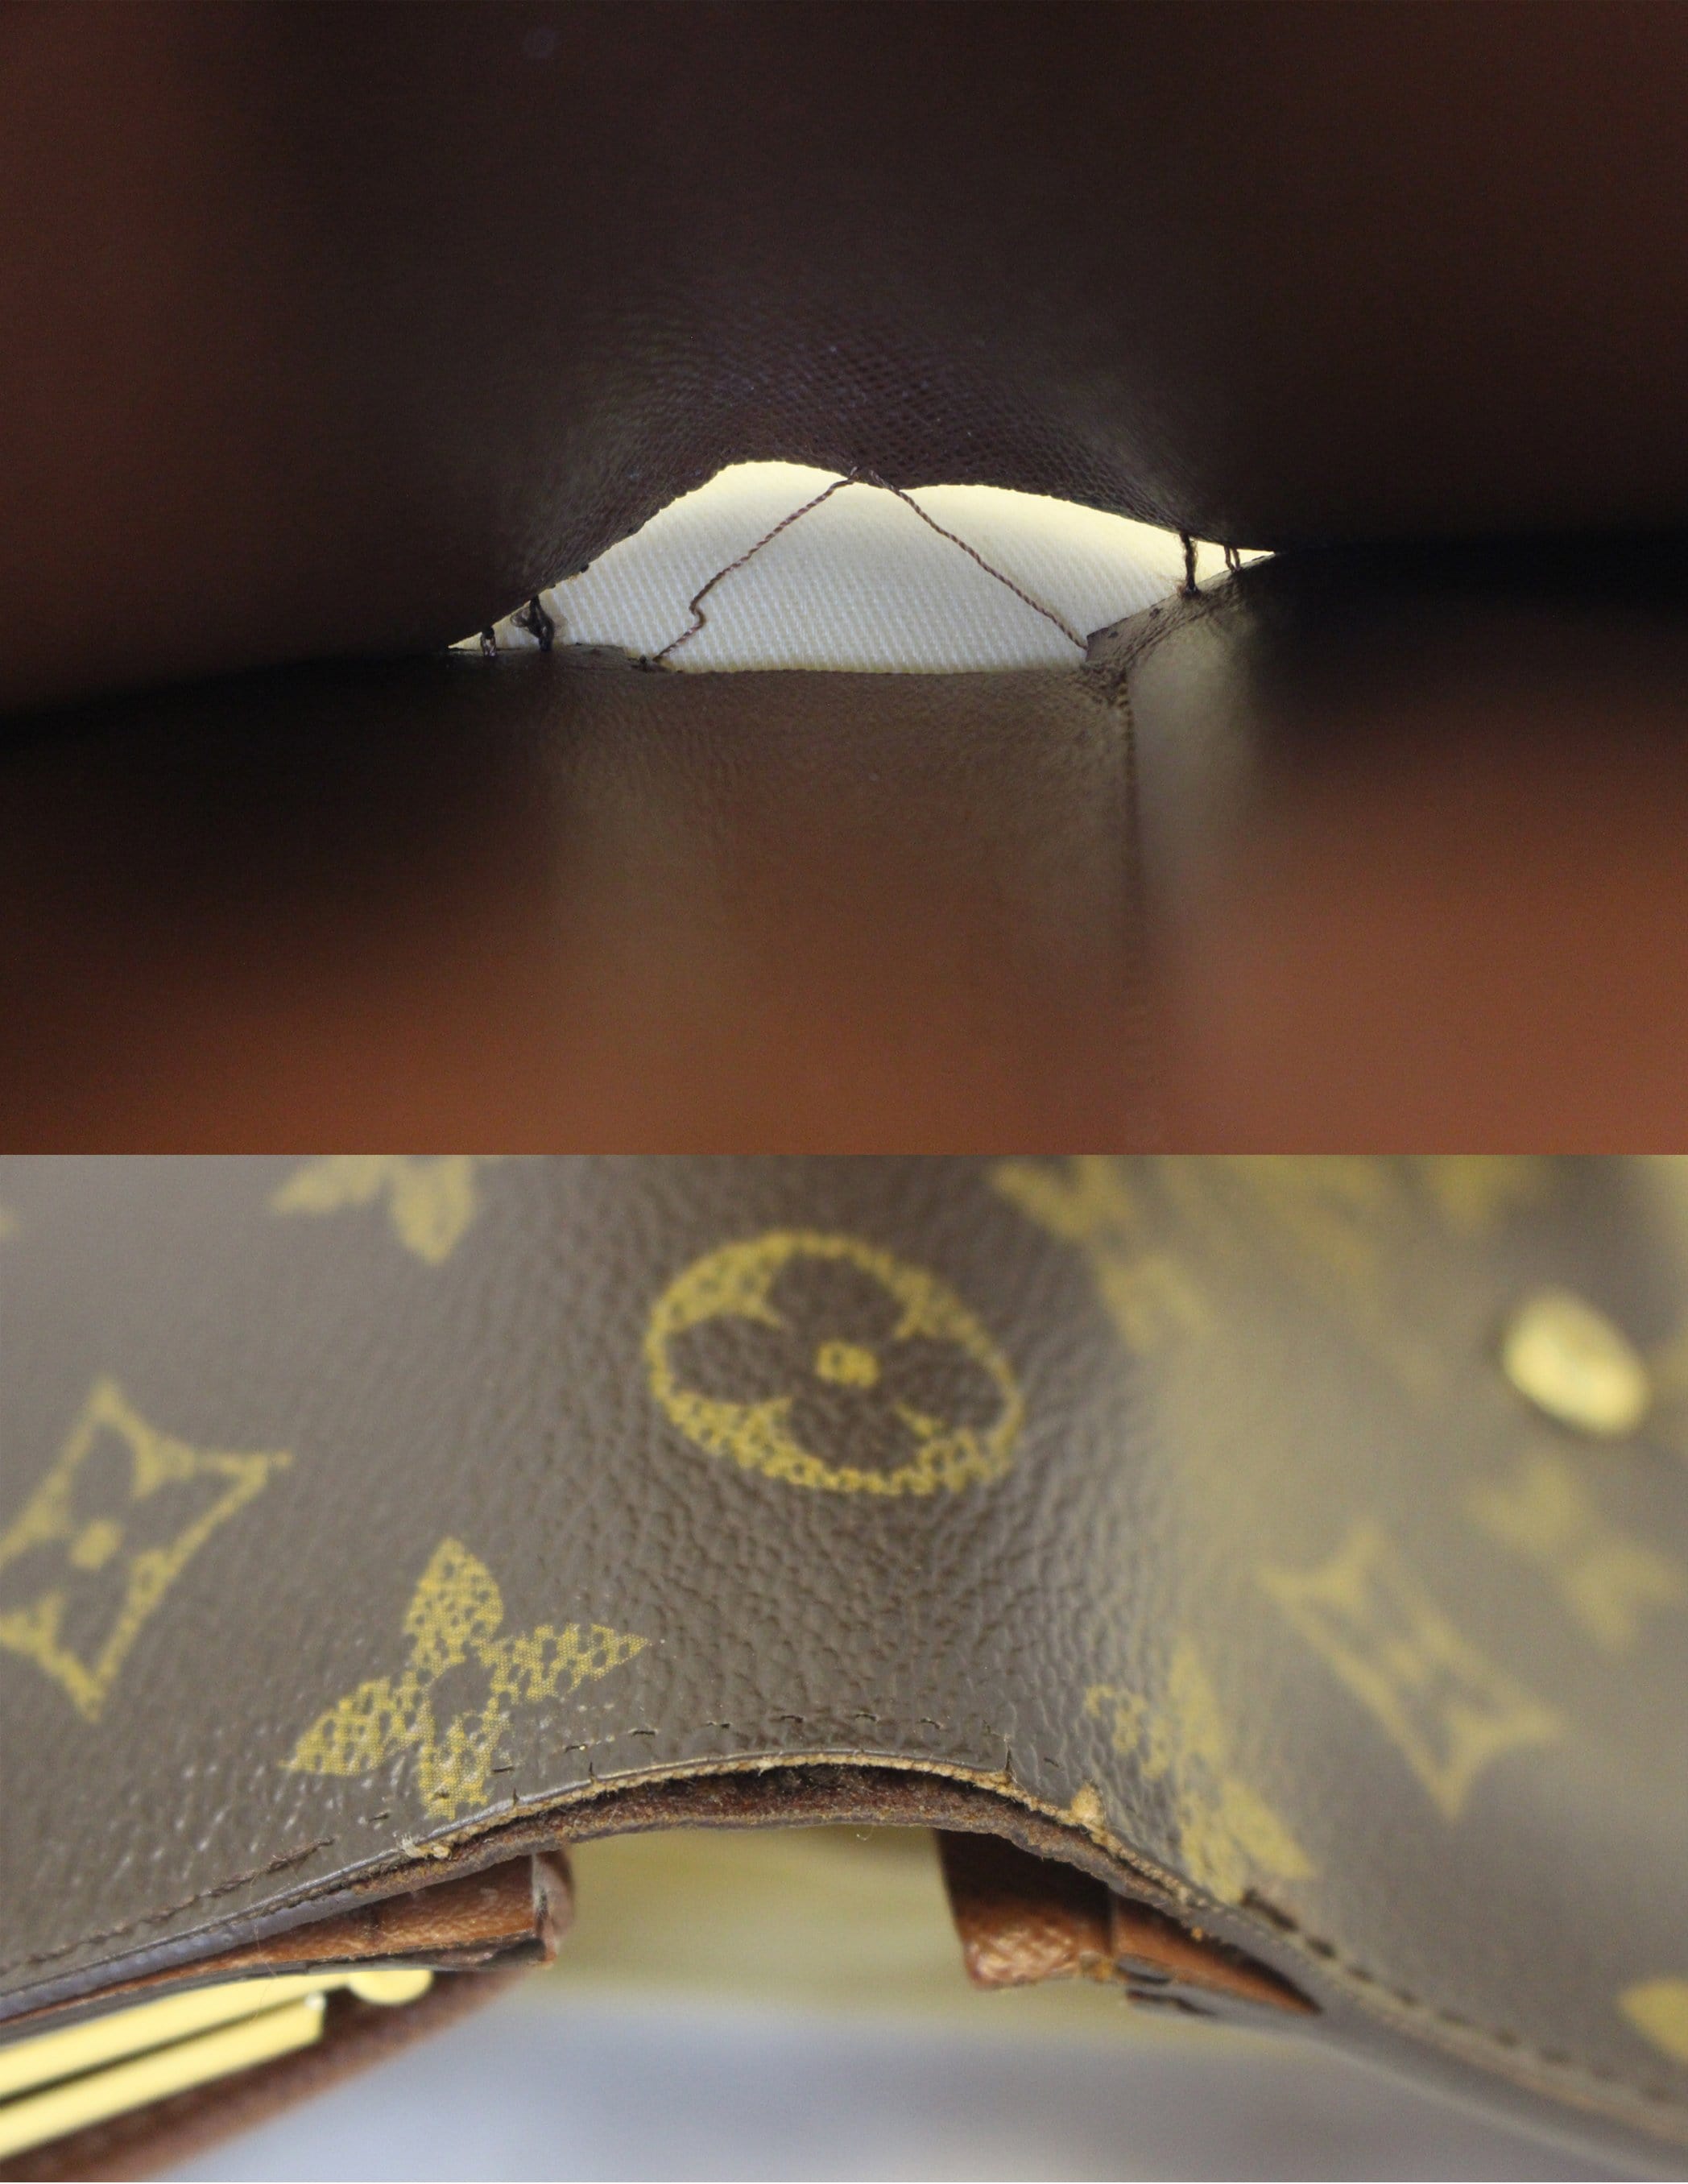 Louis Vuitton Monogram French Kiss-Lock Medium Wallet - A World Of